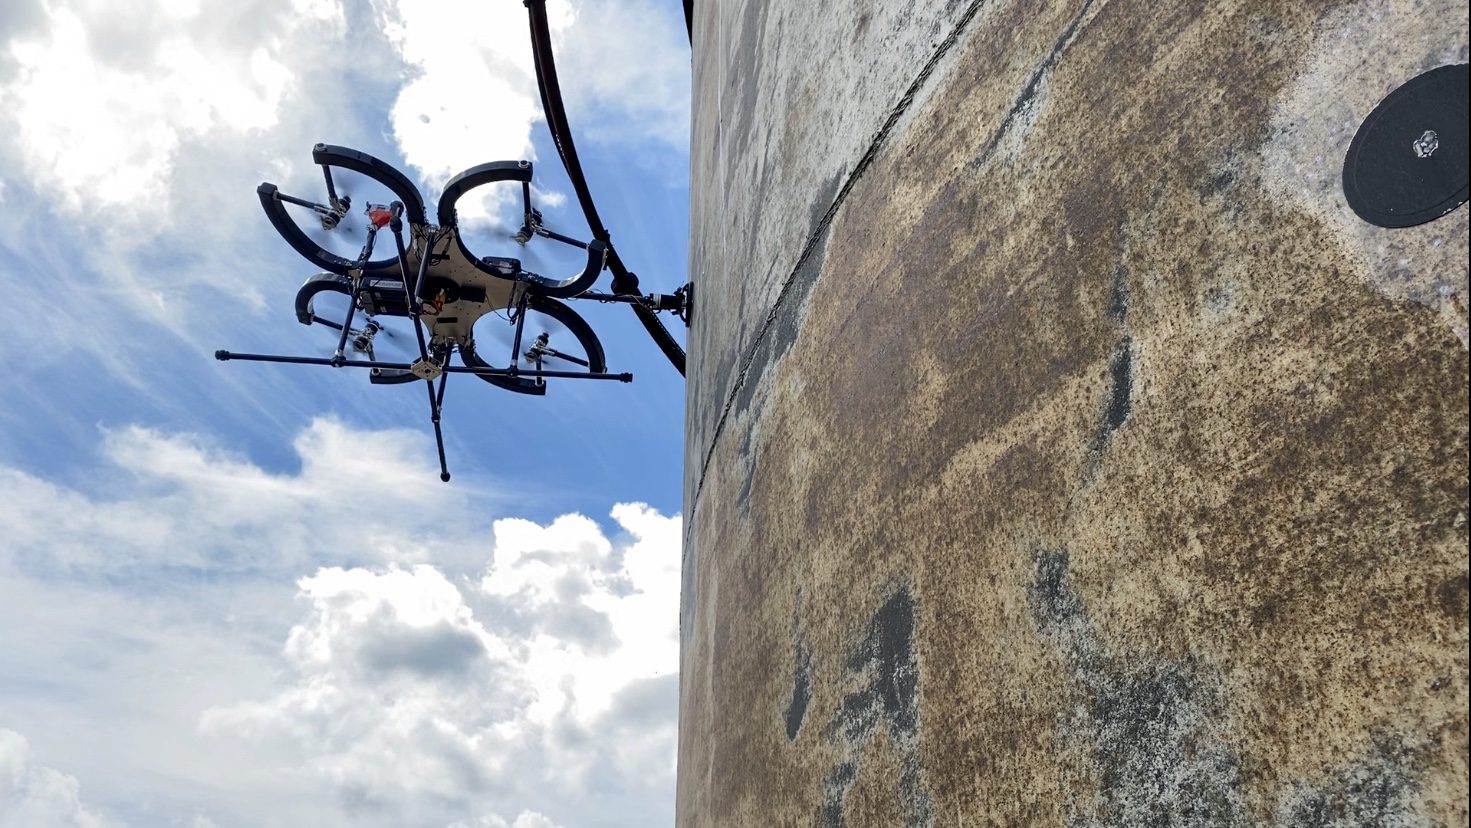 Drone inspection using ultrasonic testing